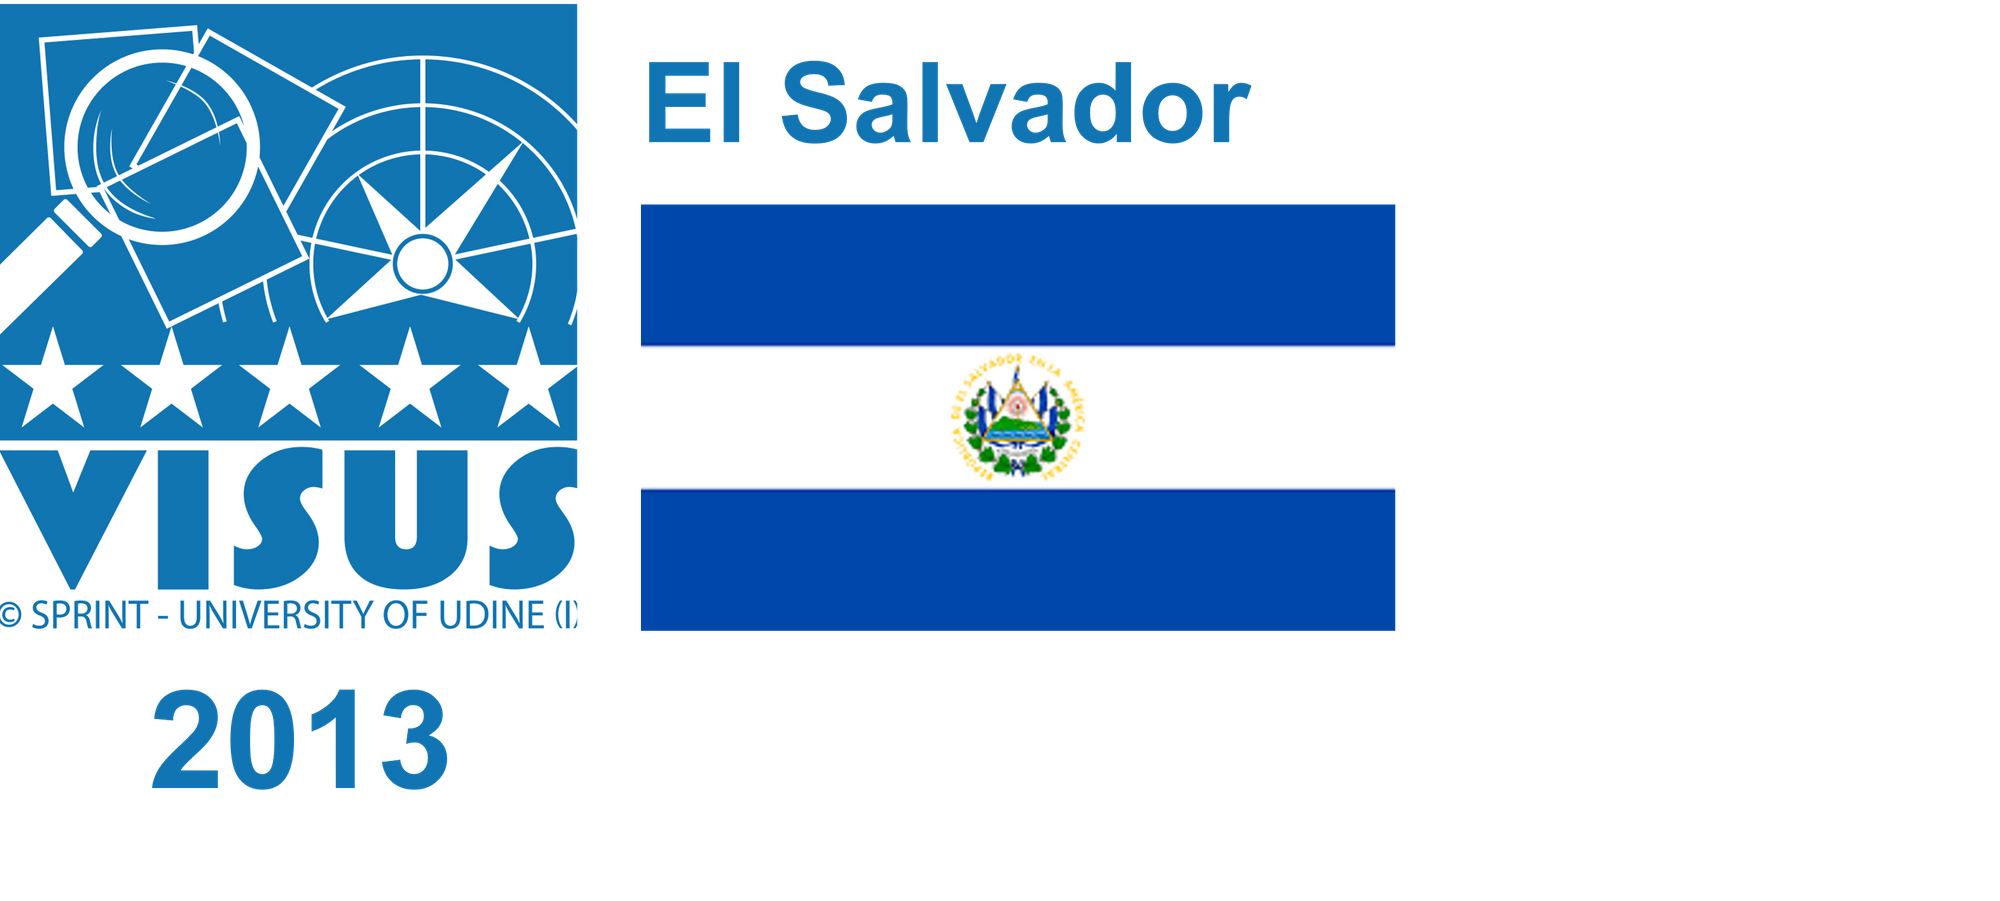 El Salvador, 2013